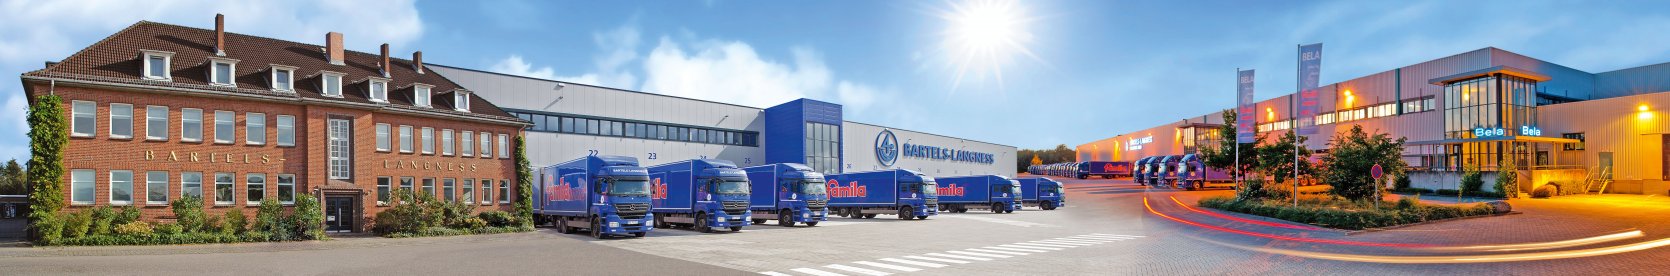 Bartels-Langness Handelsgesellschaft mbH & Co. KG